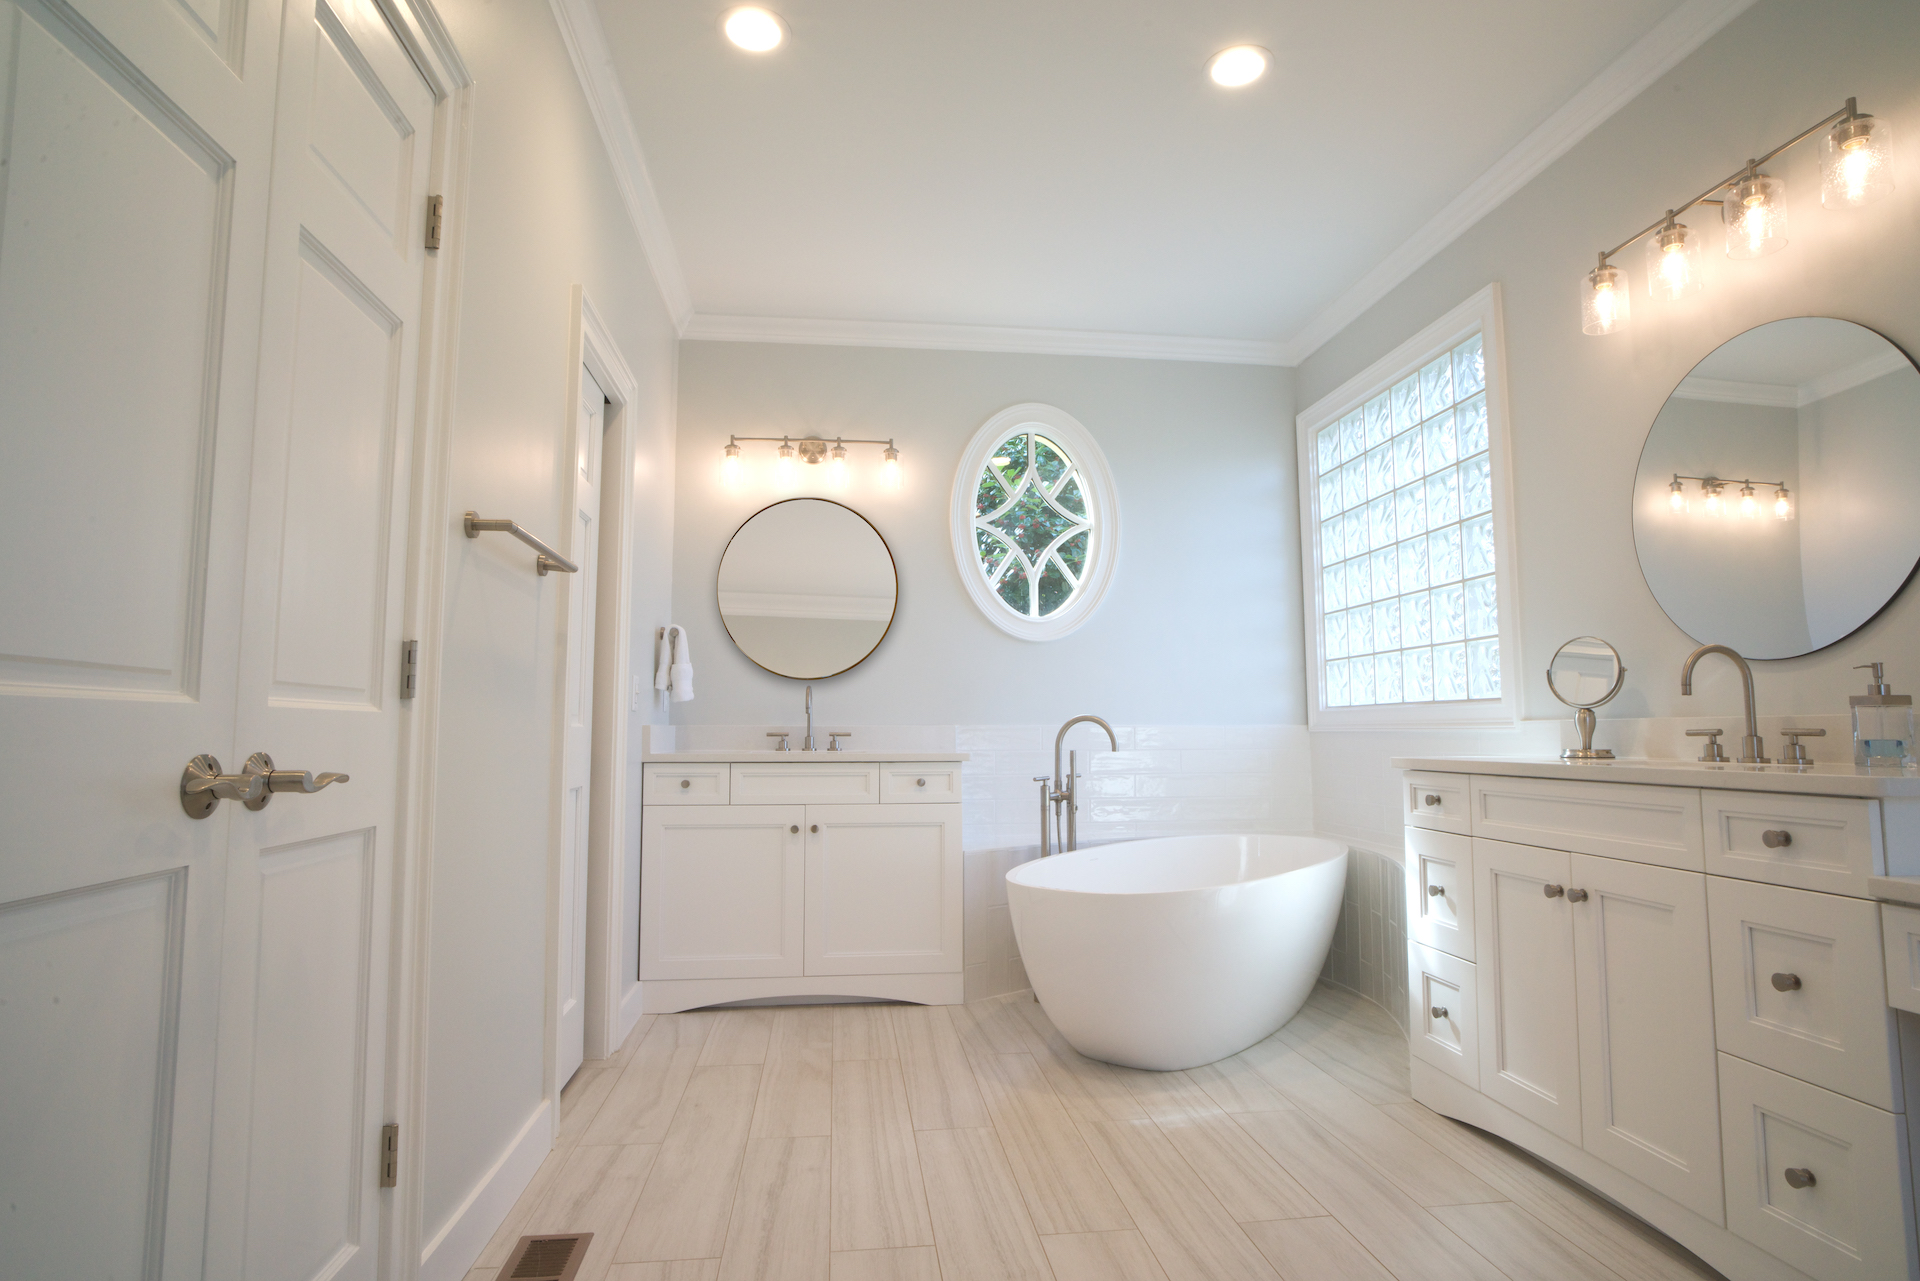 Master bathroom remodel with soaking tub and separate vanities